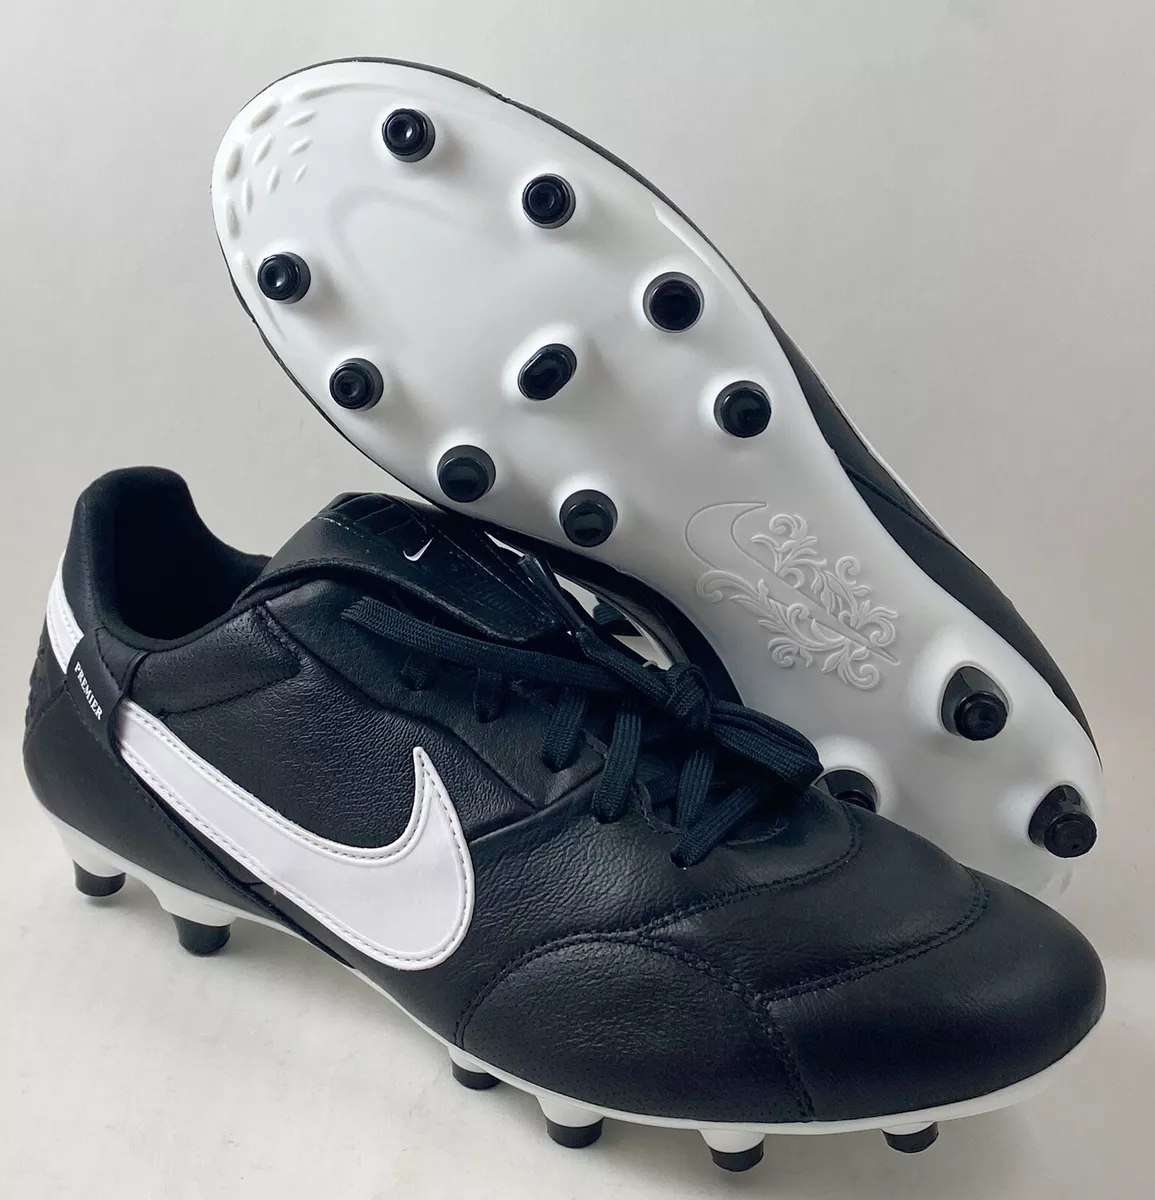 Nike Premier III 3 FG Soccer Cleats White AT5889-010 Men's Size 7-12.5 eBay